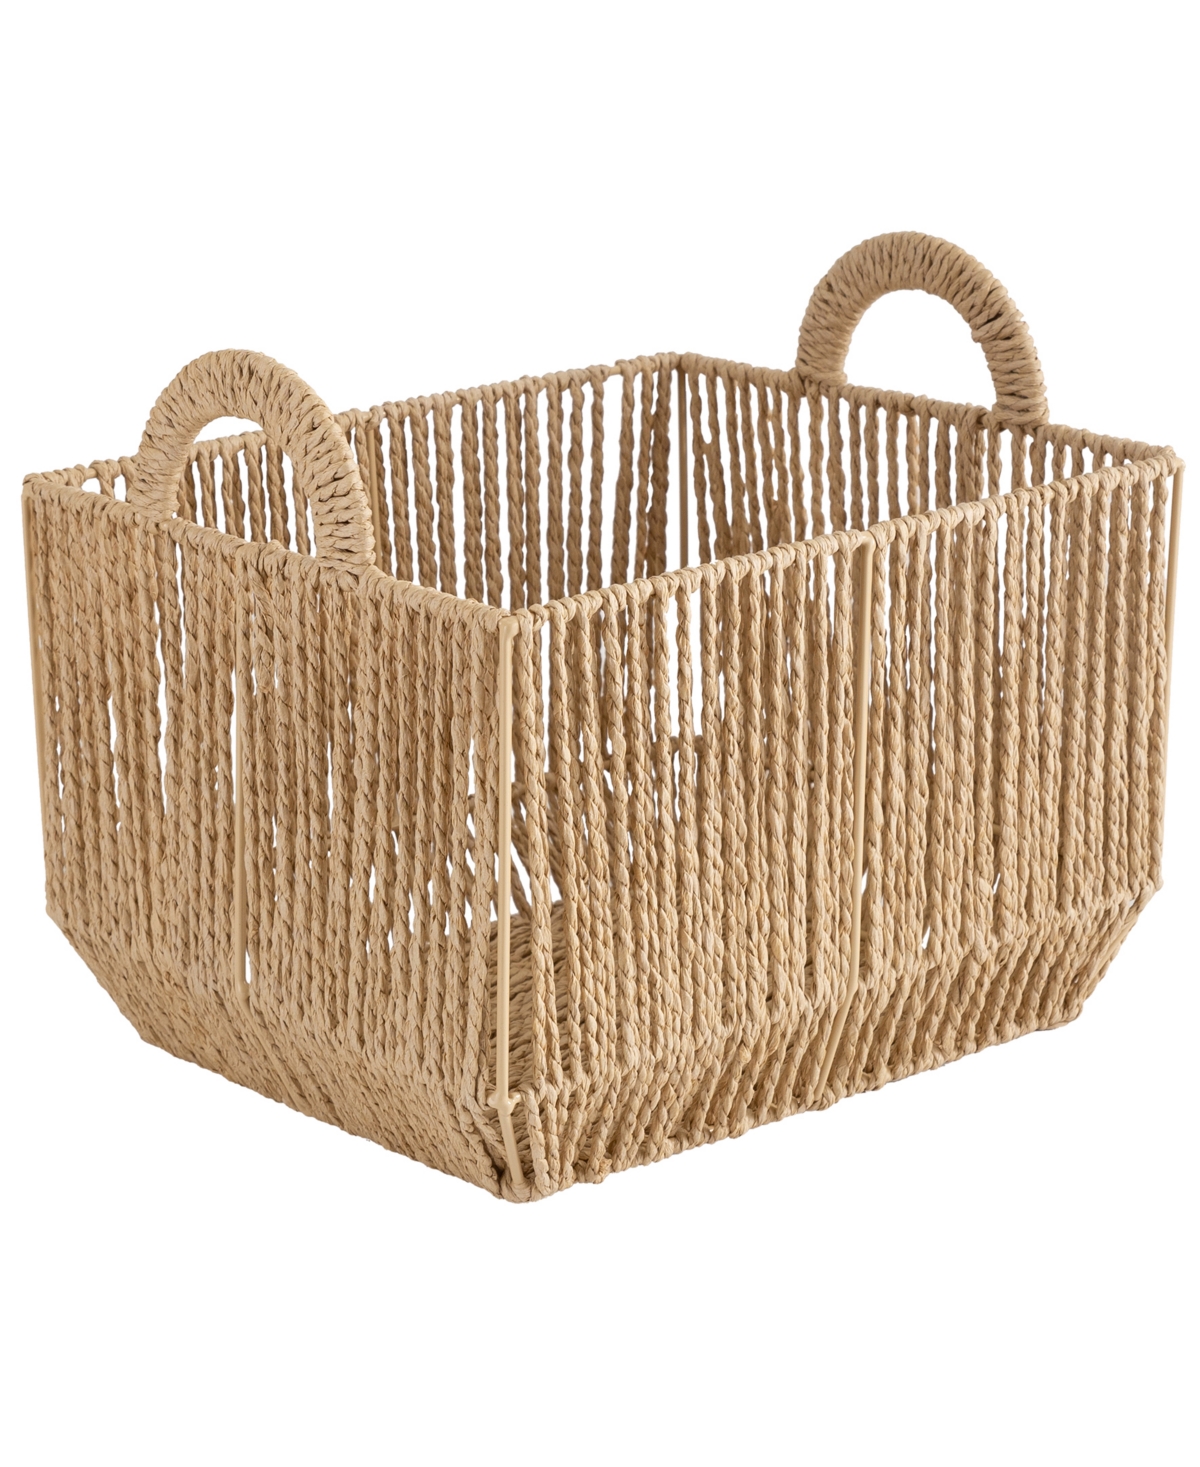 Vertical Weave Large Storage Basket with Round Handles - Beige